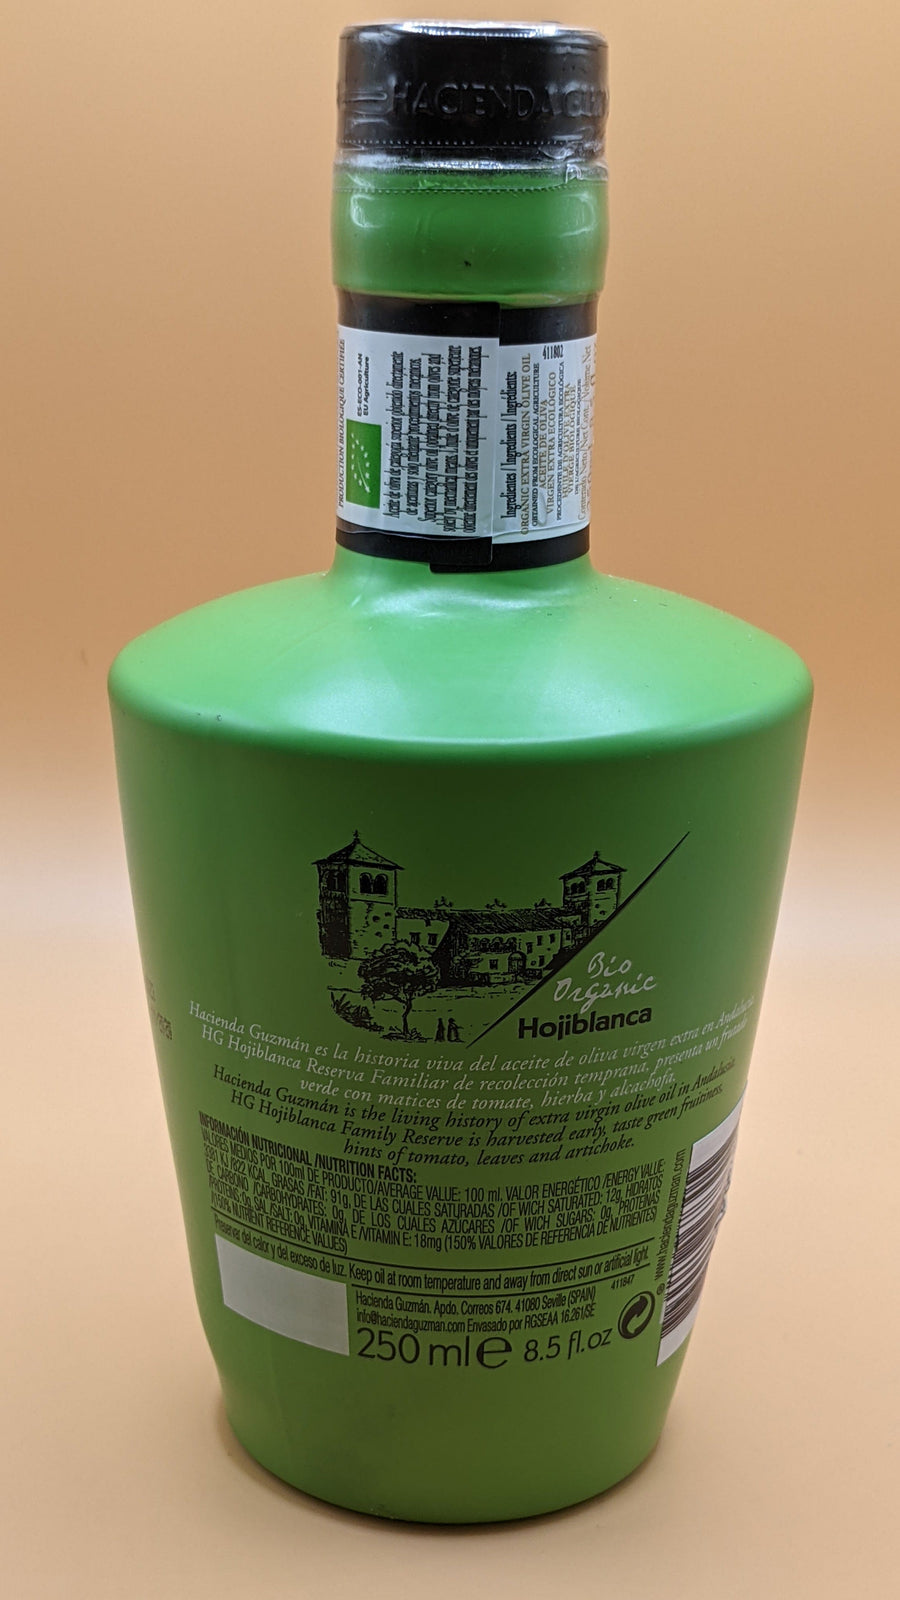 Green-bottle-HaciendaGuzmanHojiblancaExtraVirginOliveOil-Organic1-Real-Gourmet-Food-Back-of-bottle